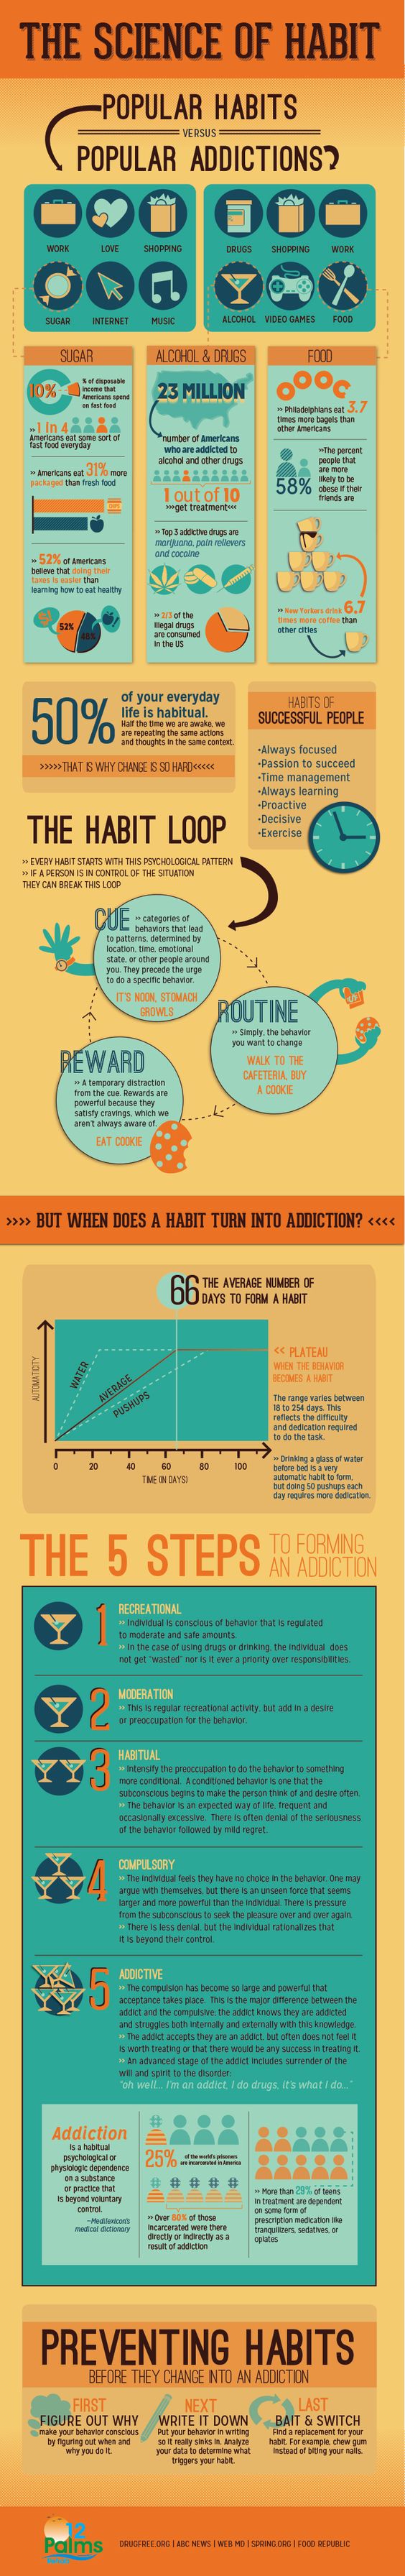 The Science of Habit: Popular Habits vs. Popular Addictions #Infographic